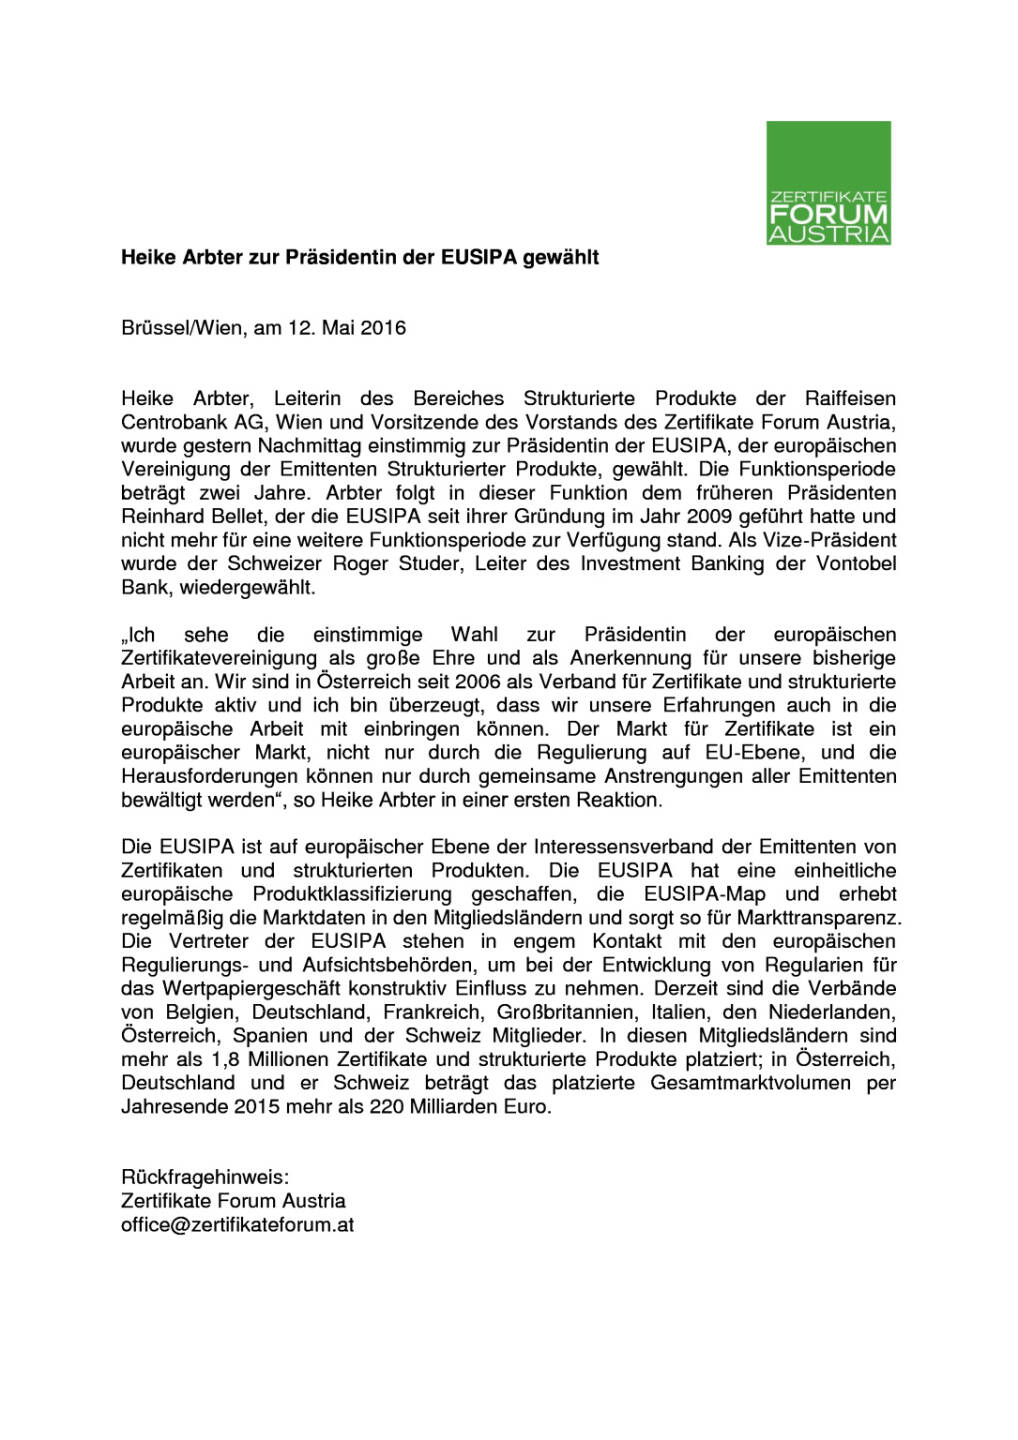 ZFA: Heike Arbter zur Präsidentin der EUSIPA gewählt, Seite 1/1, komplettes Dokument unter http://boerse-social.com/static/uploads/file_1051_zfa_heike_arbter_zur_prasidentin_der_eusipa_gewahlt.pdf